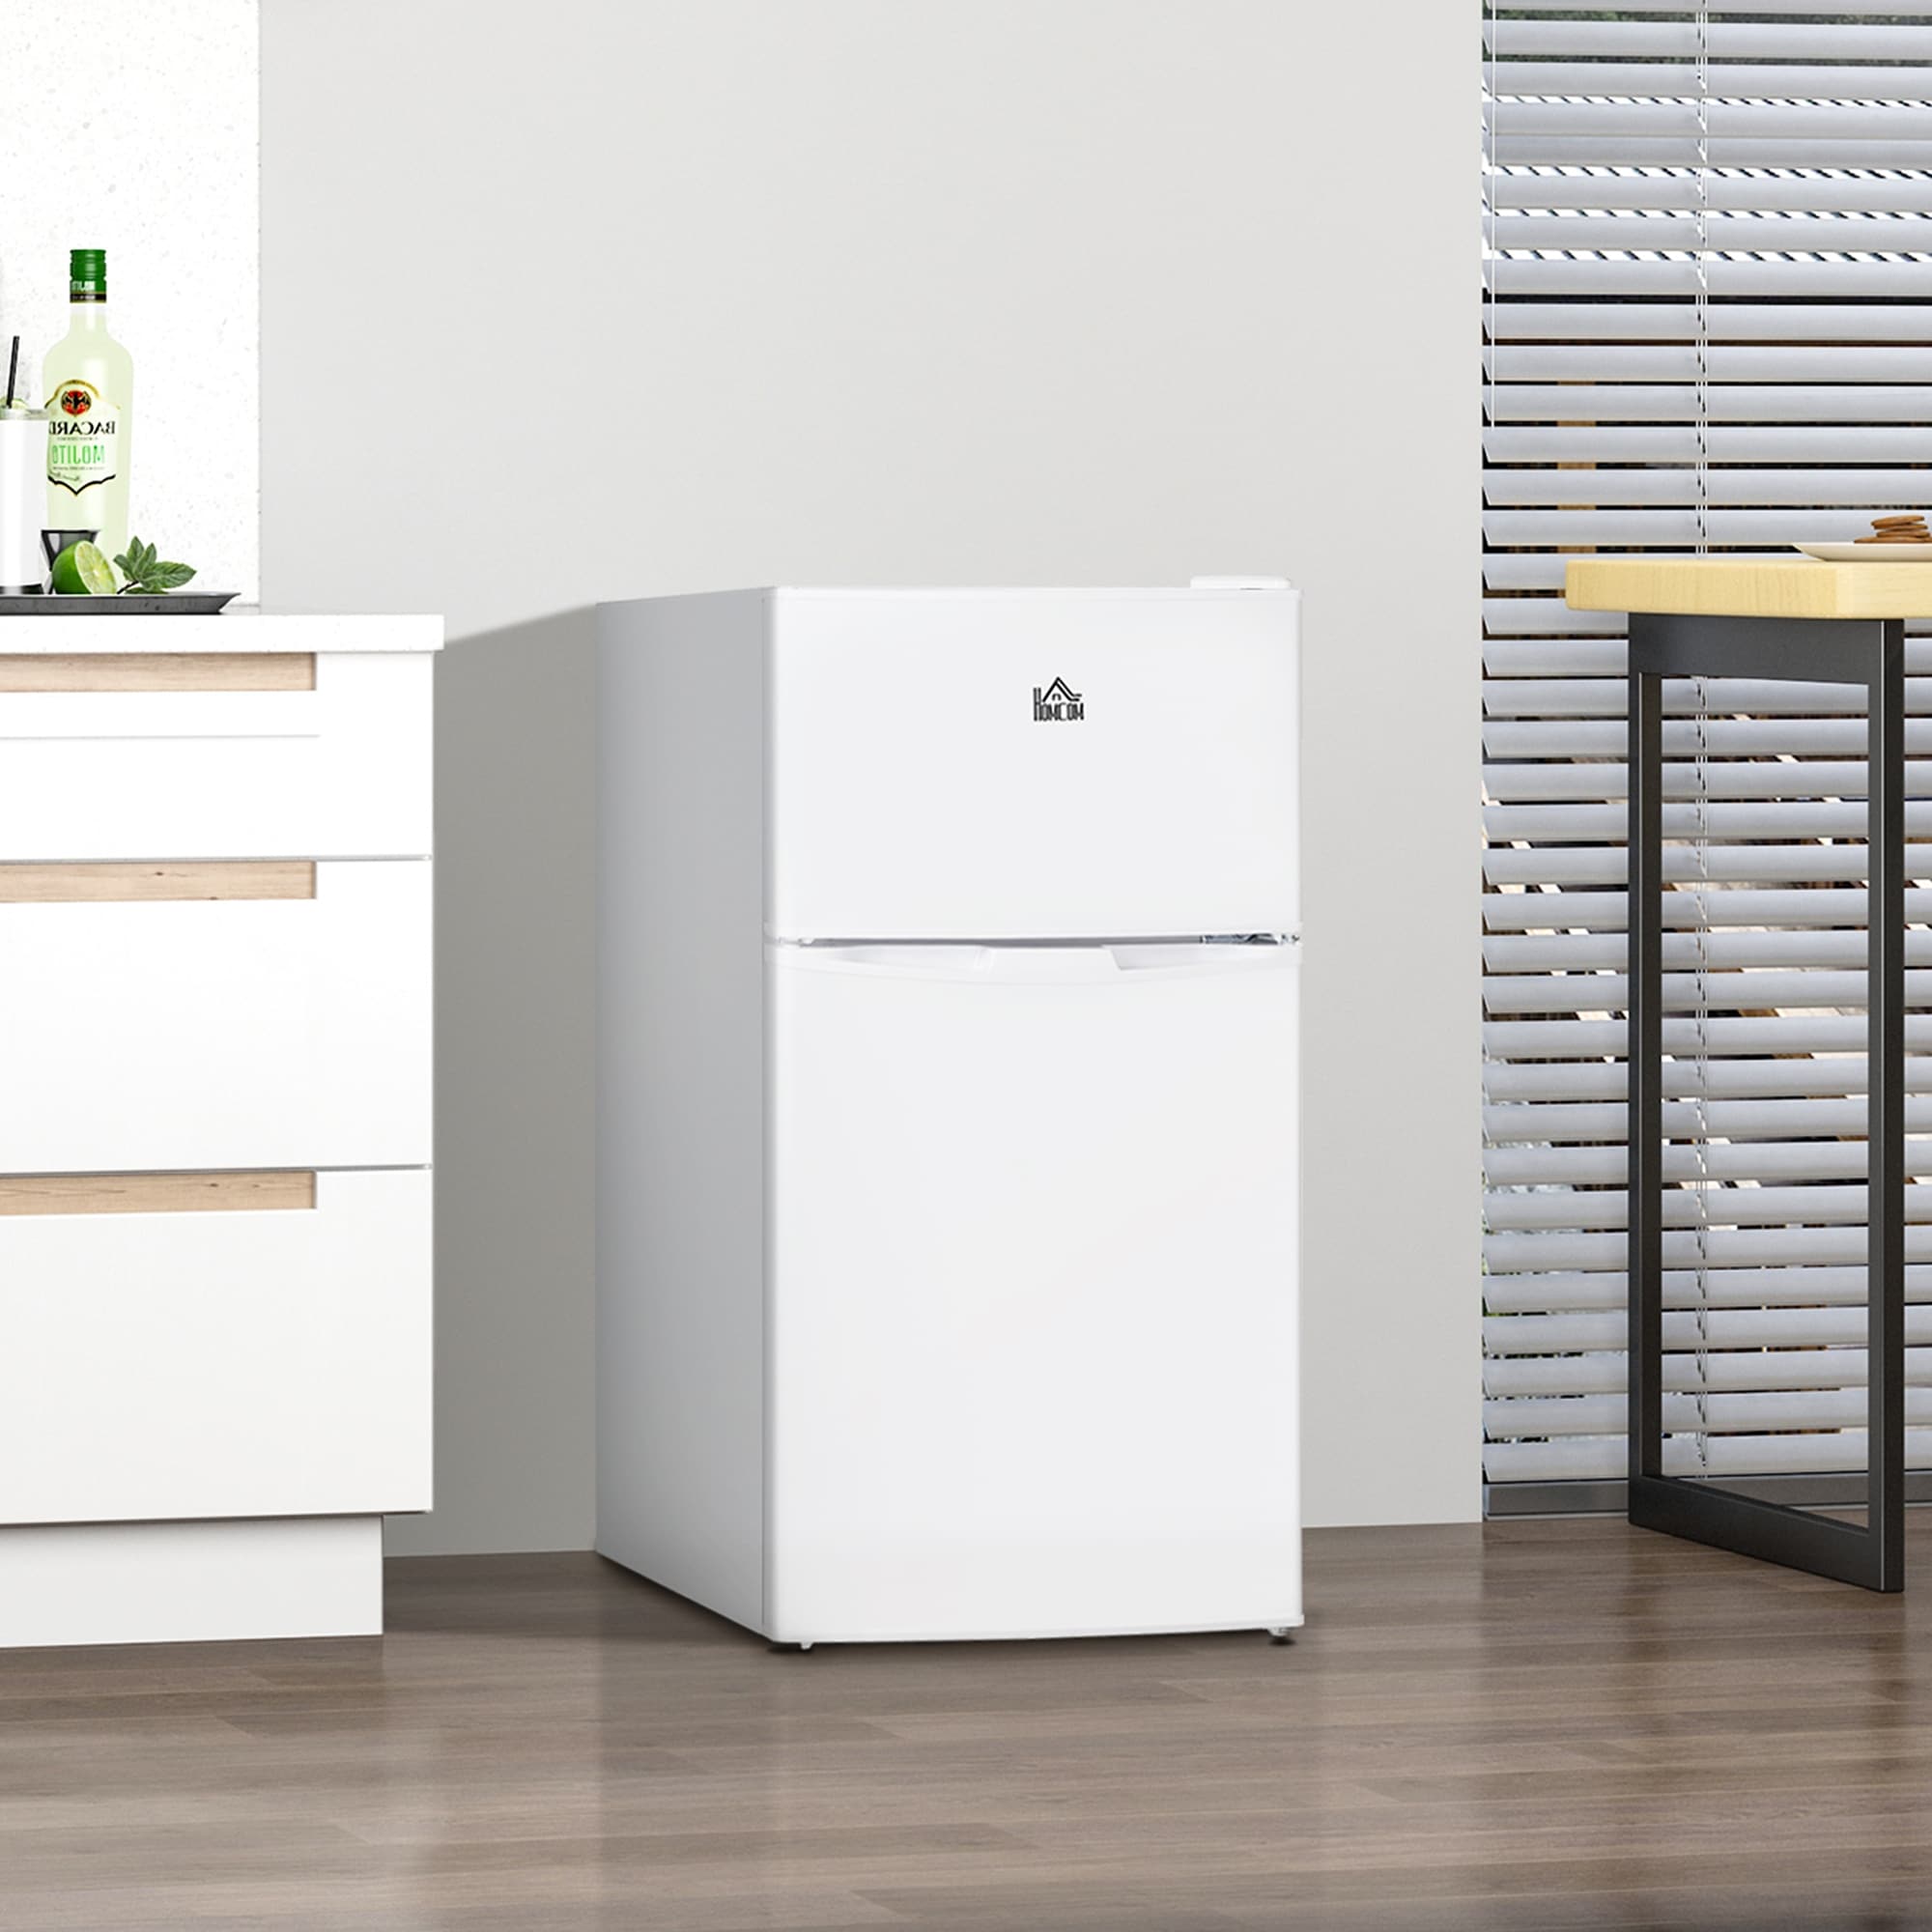 3.2 Cu.Ft Freestanding Compact Refrigerator with Freezer,2 Doors - On Sale  - Bed Bath & Beyond - 33199151